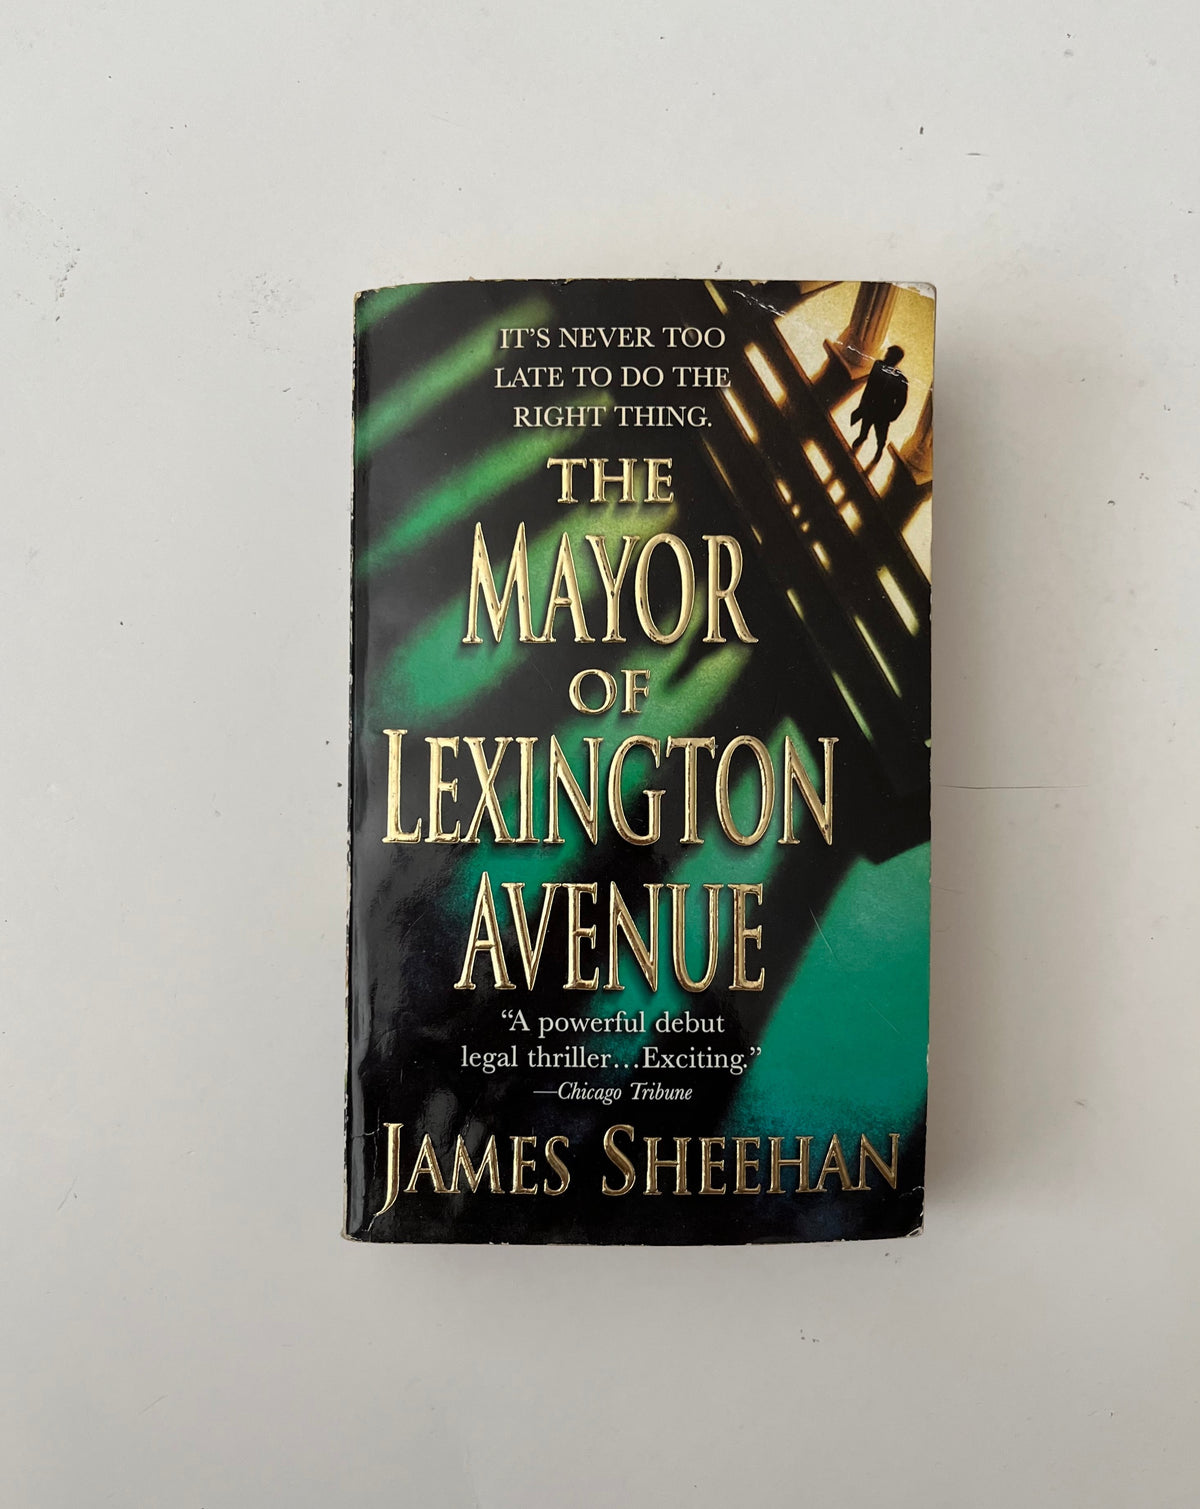 DONATE: The Mayor of Lexington Avenue by James Sheehan